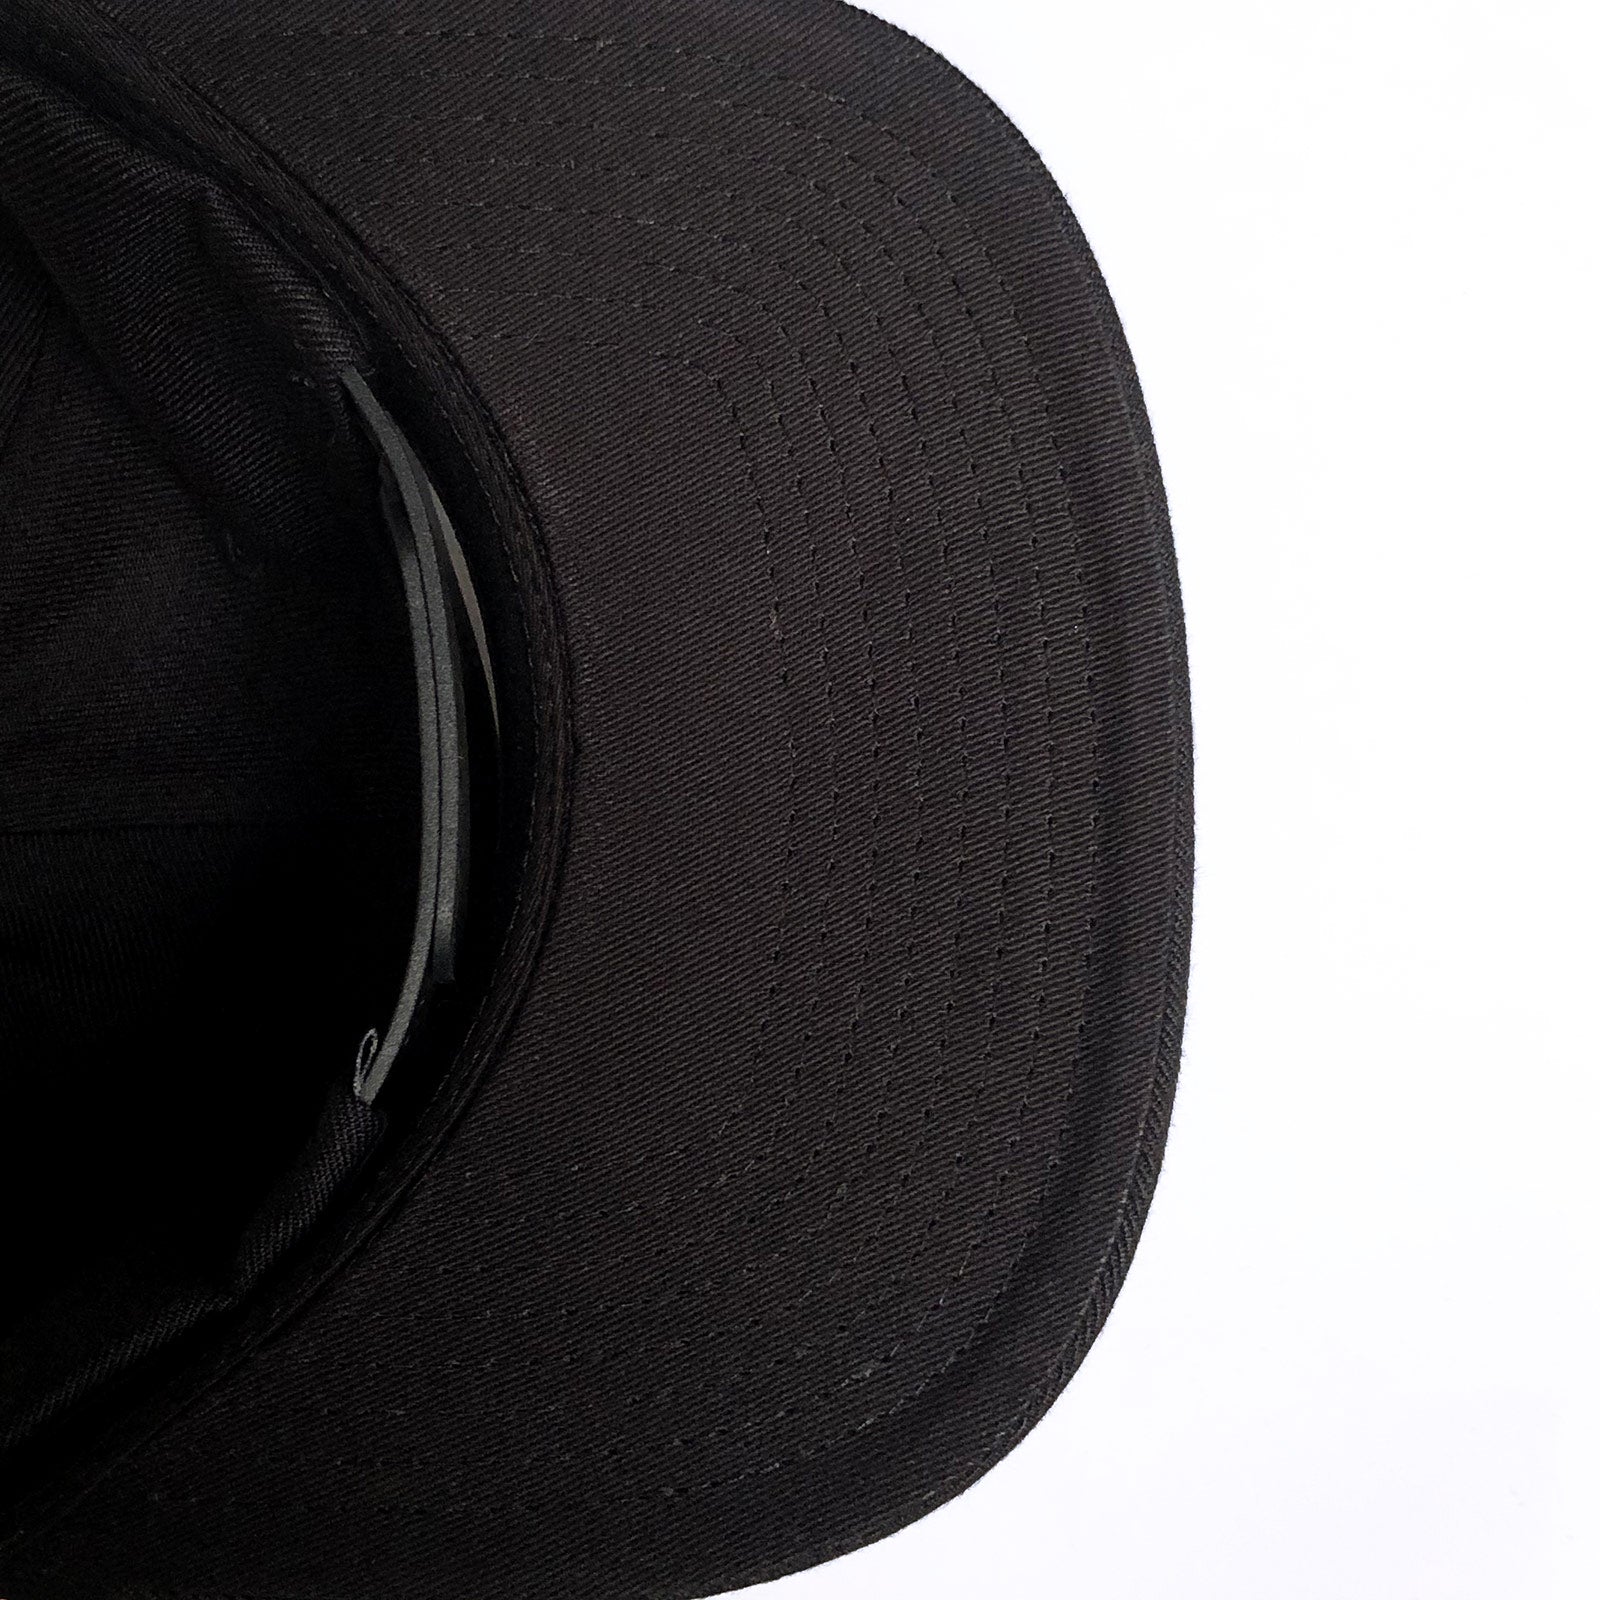 Black underside of the visor of a black baseball cap with adjustable strapback closure.